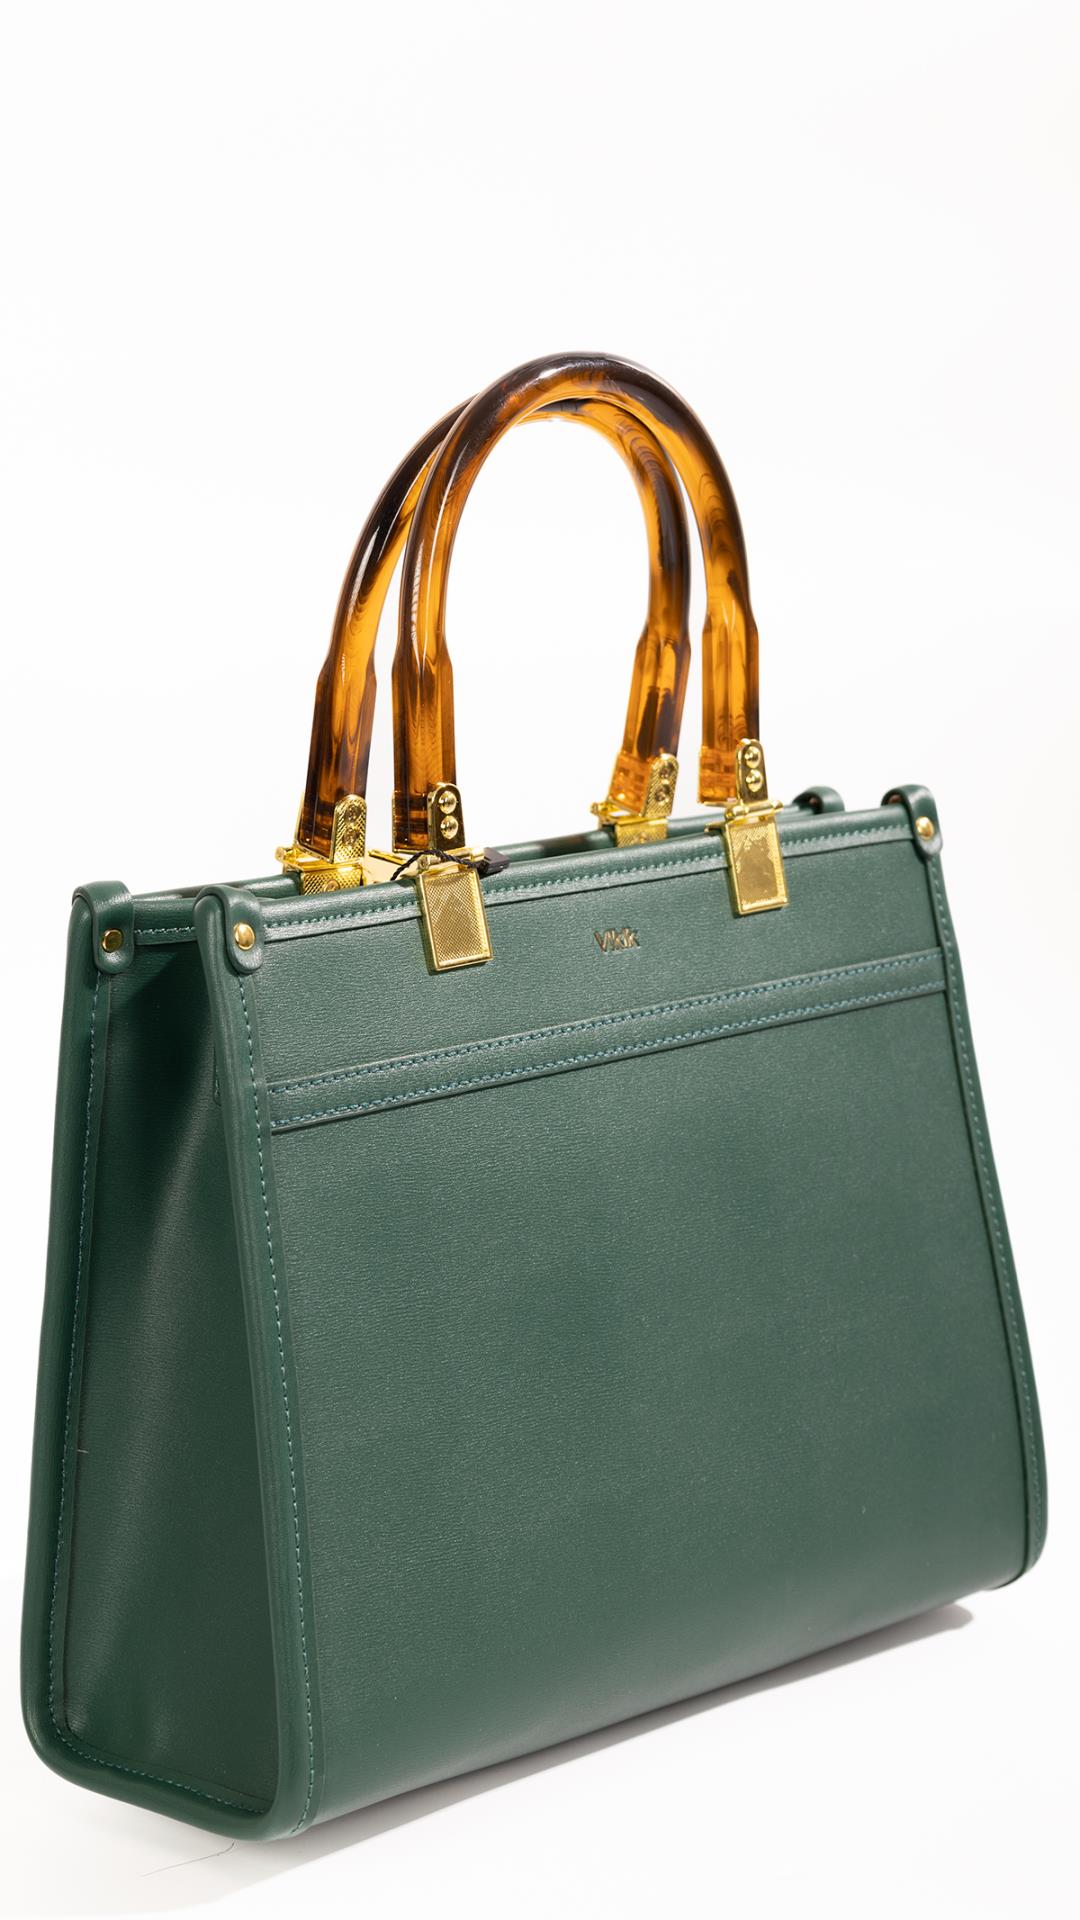 Square handbag with distinctive handle 